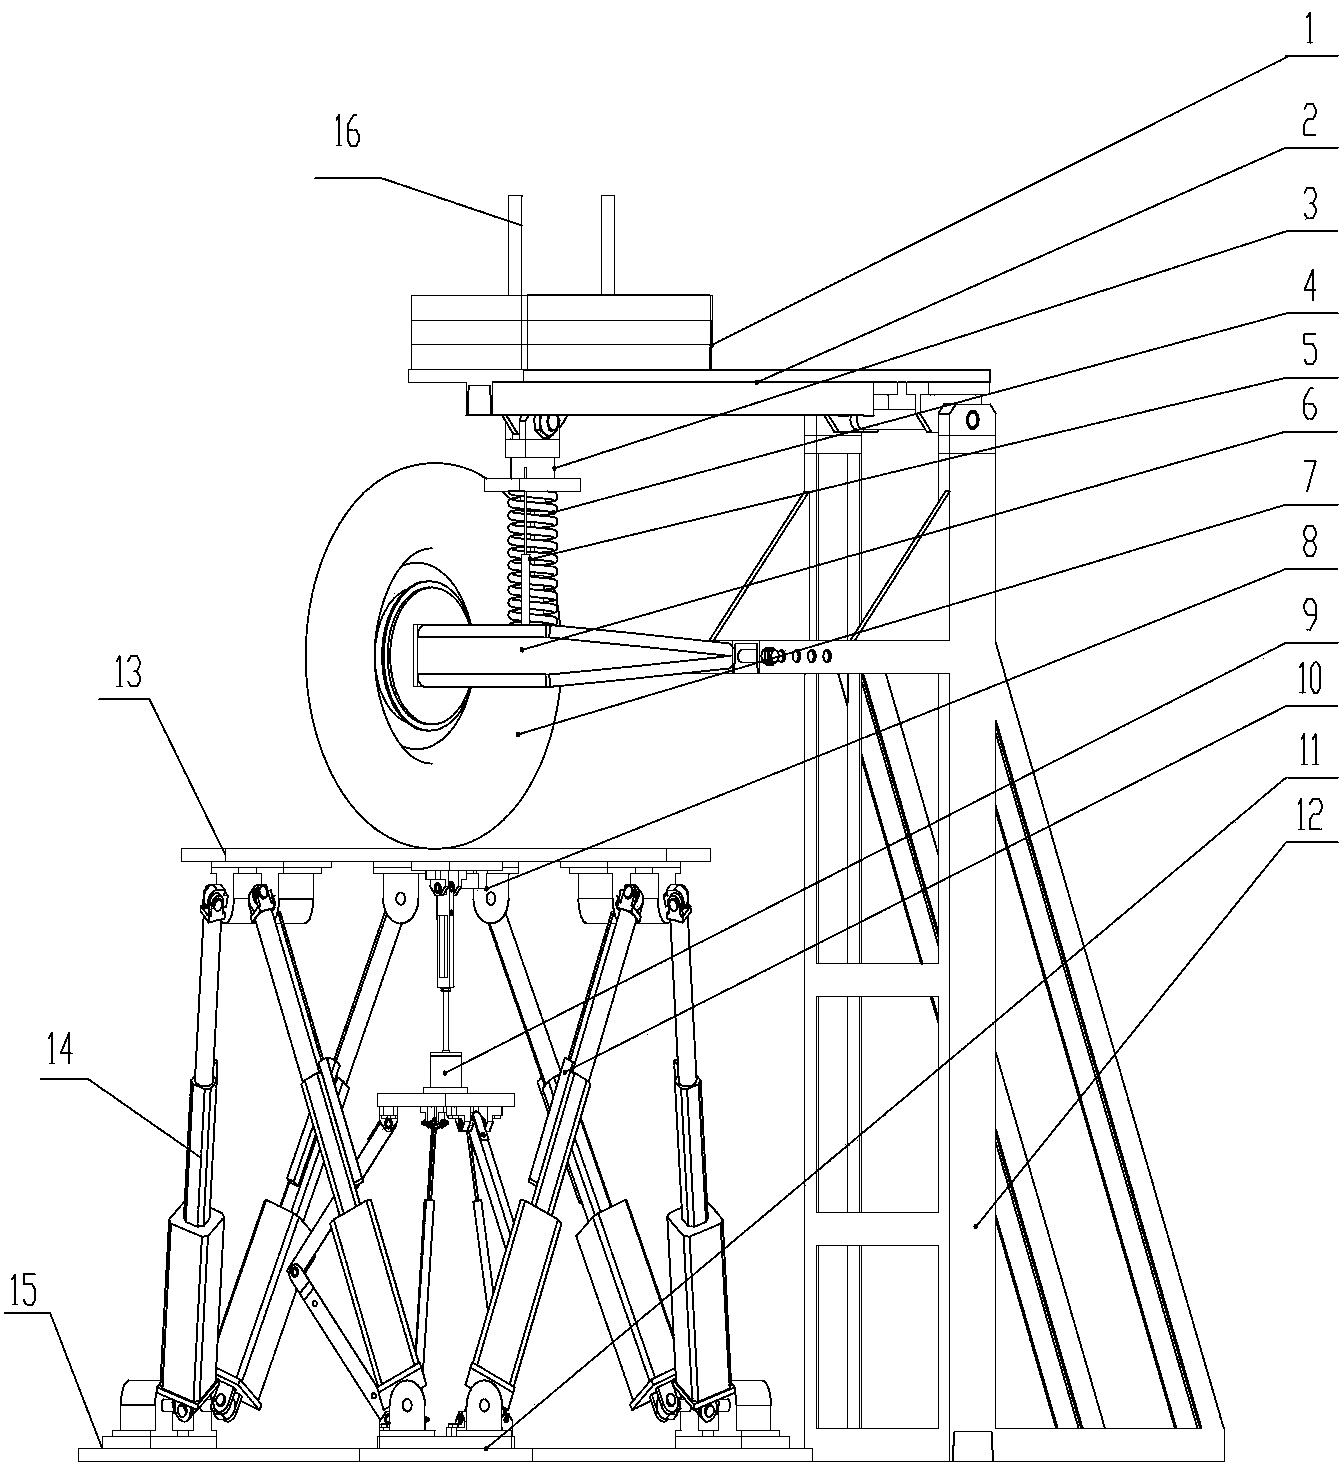 Six-dimensional parallel-connection test bench for automobile suspension test